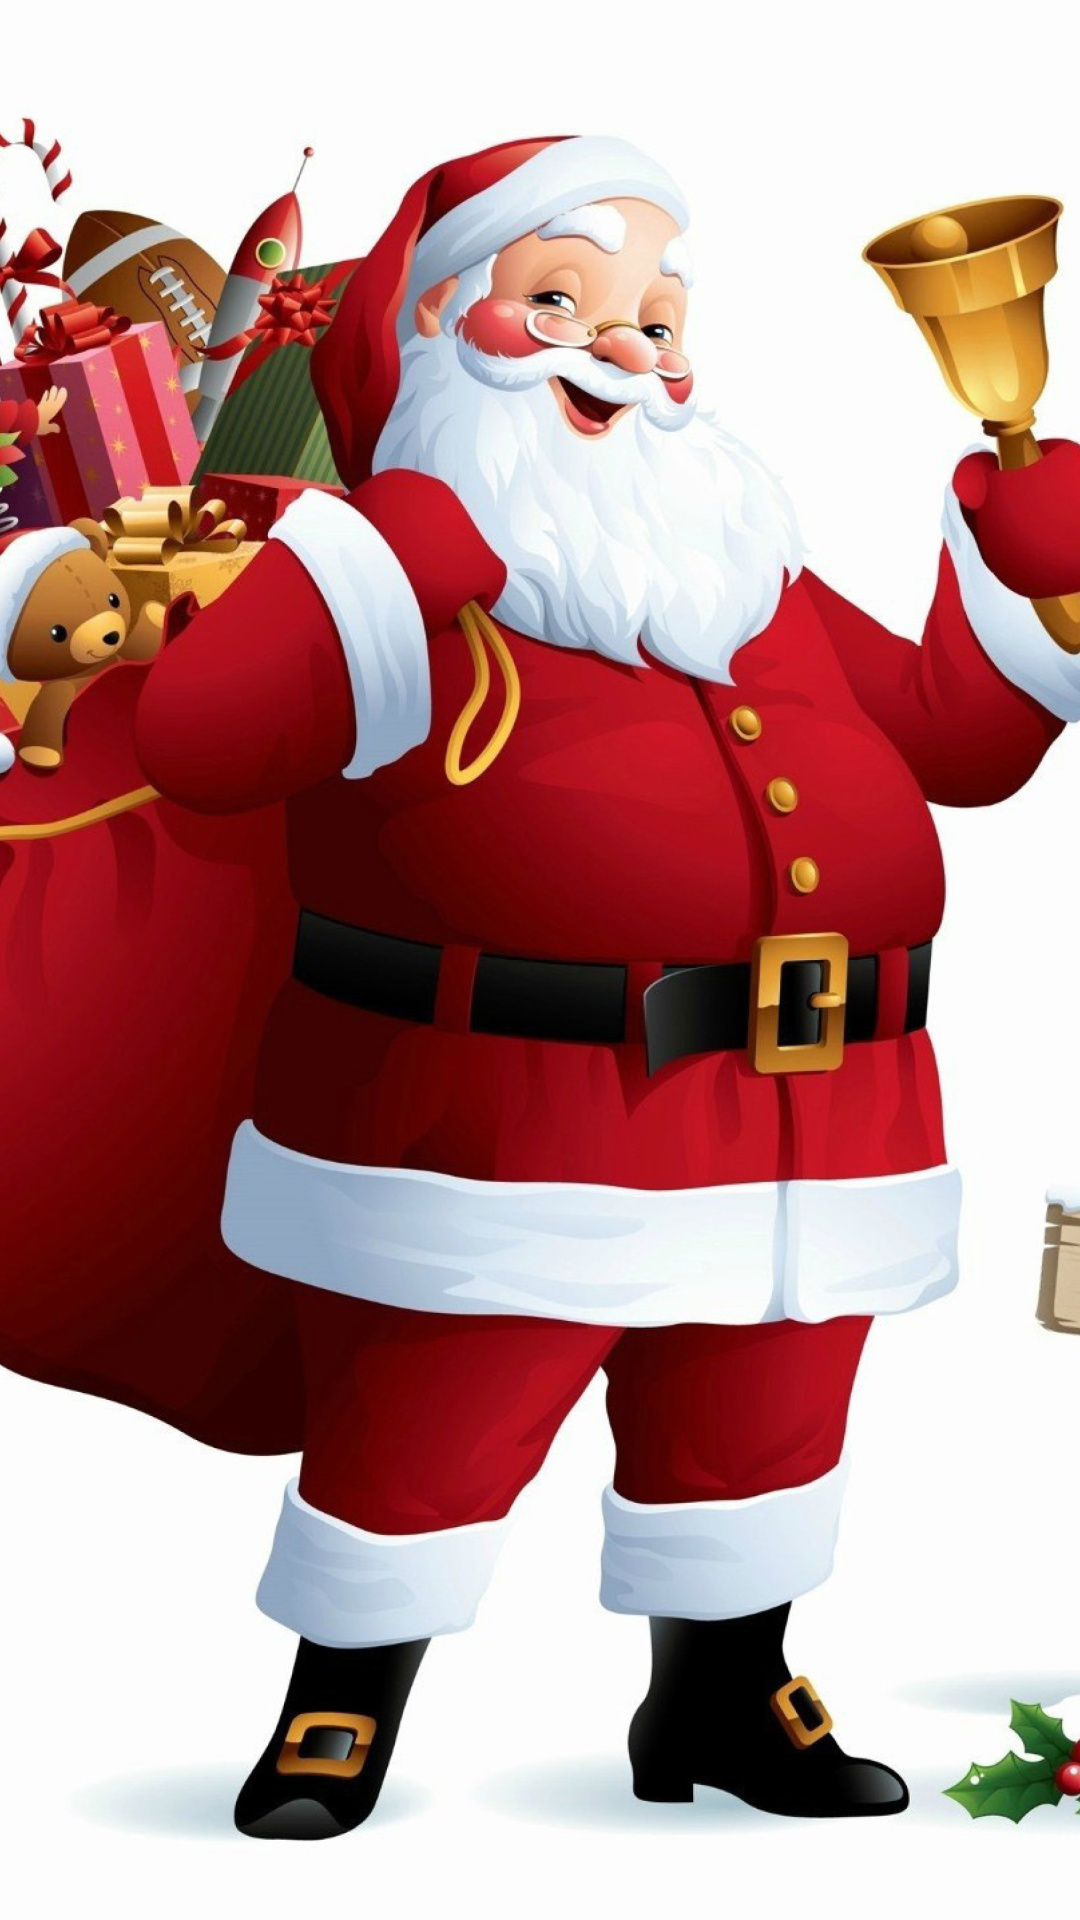 Das HO HO HO Merry Christmas Santa Claus Wallpaper 1080x1920